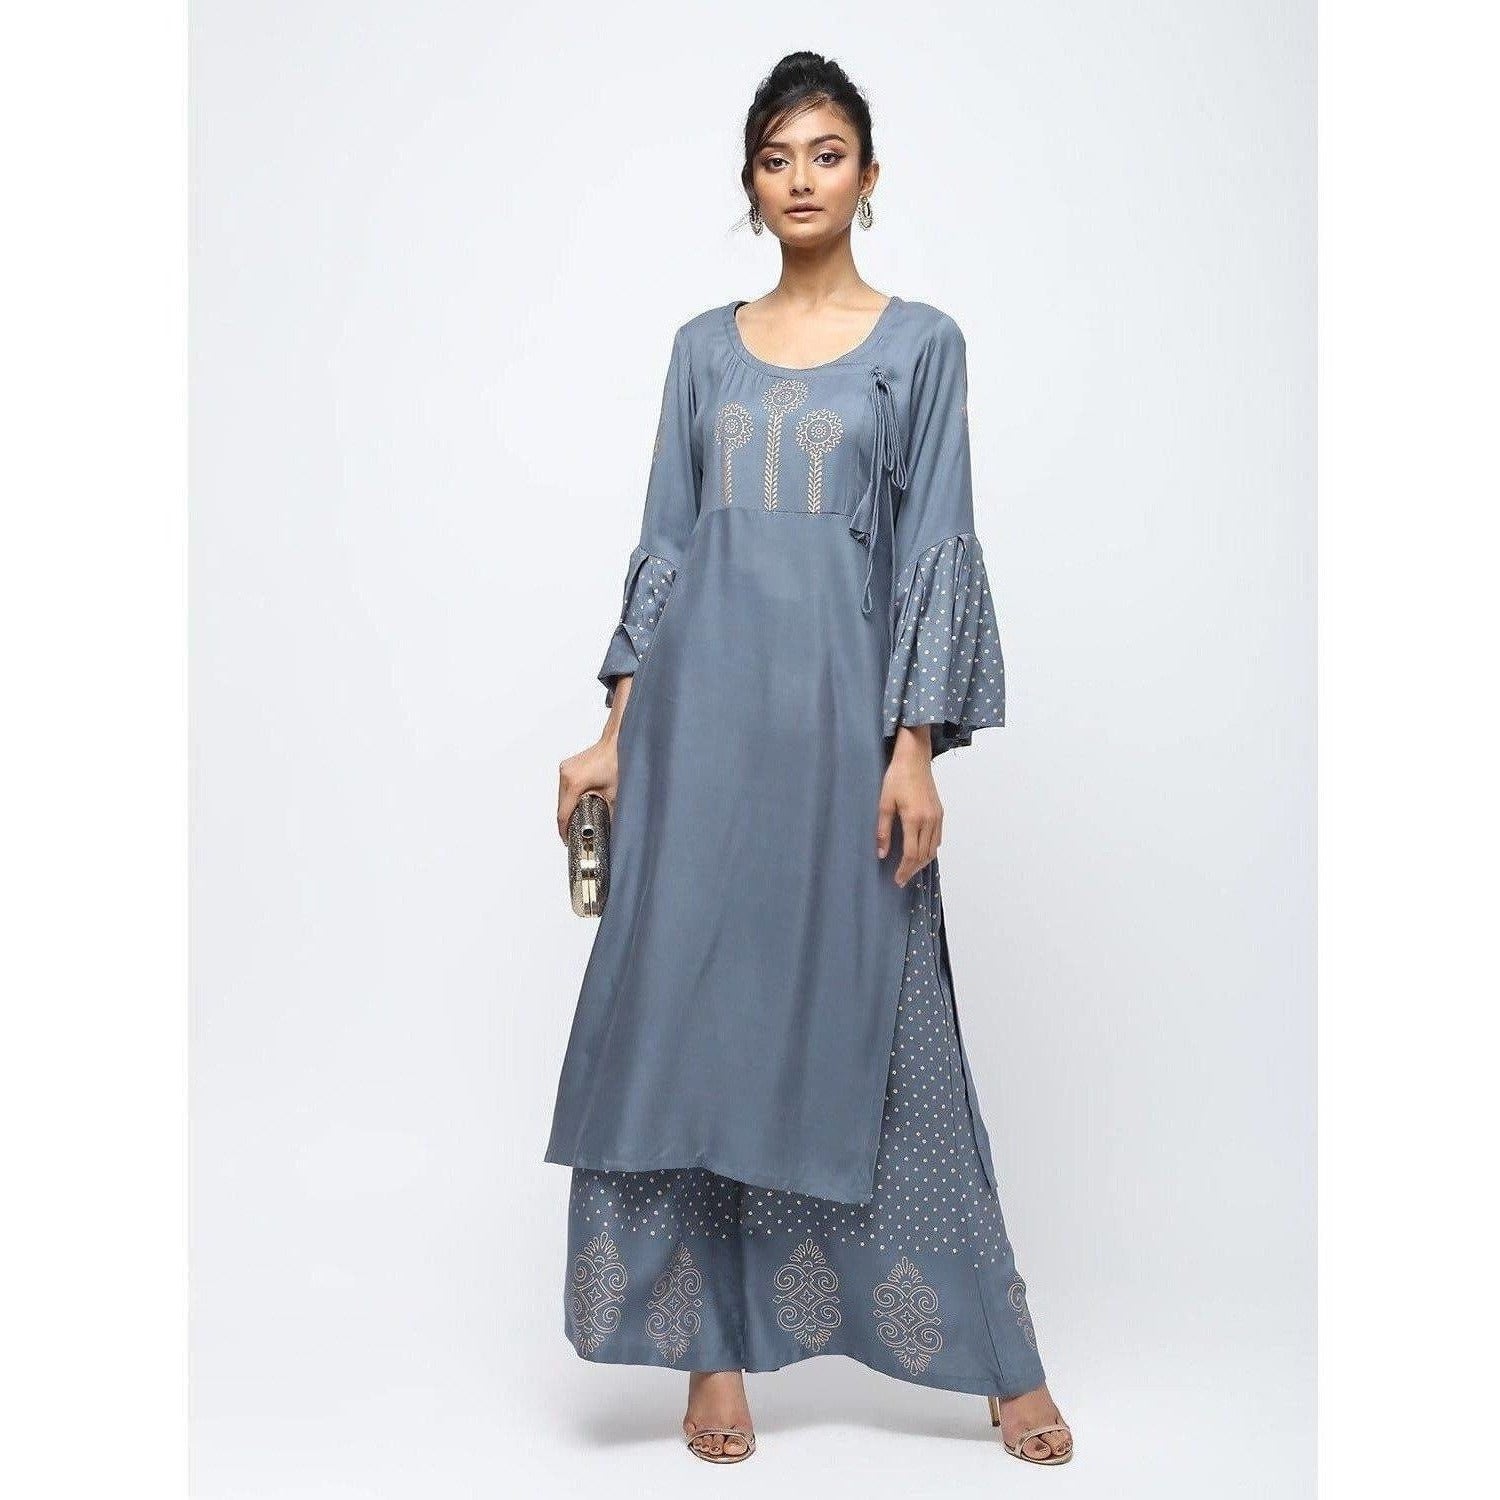 Ro-Sky Fashion-Women Latest straight kurti Cap Sleeves Design Grey Colour  Cotton Soft Fabric.